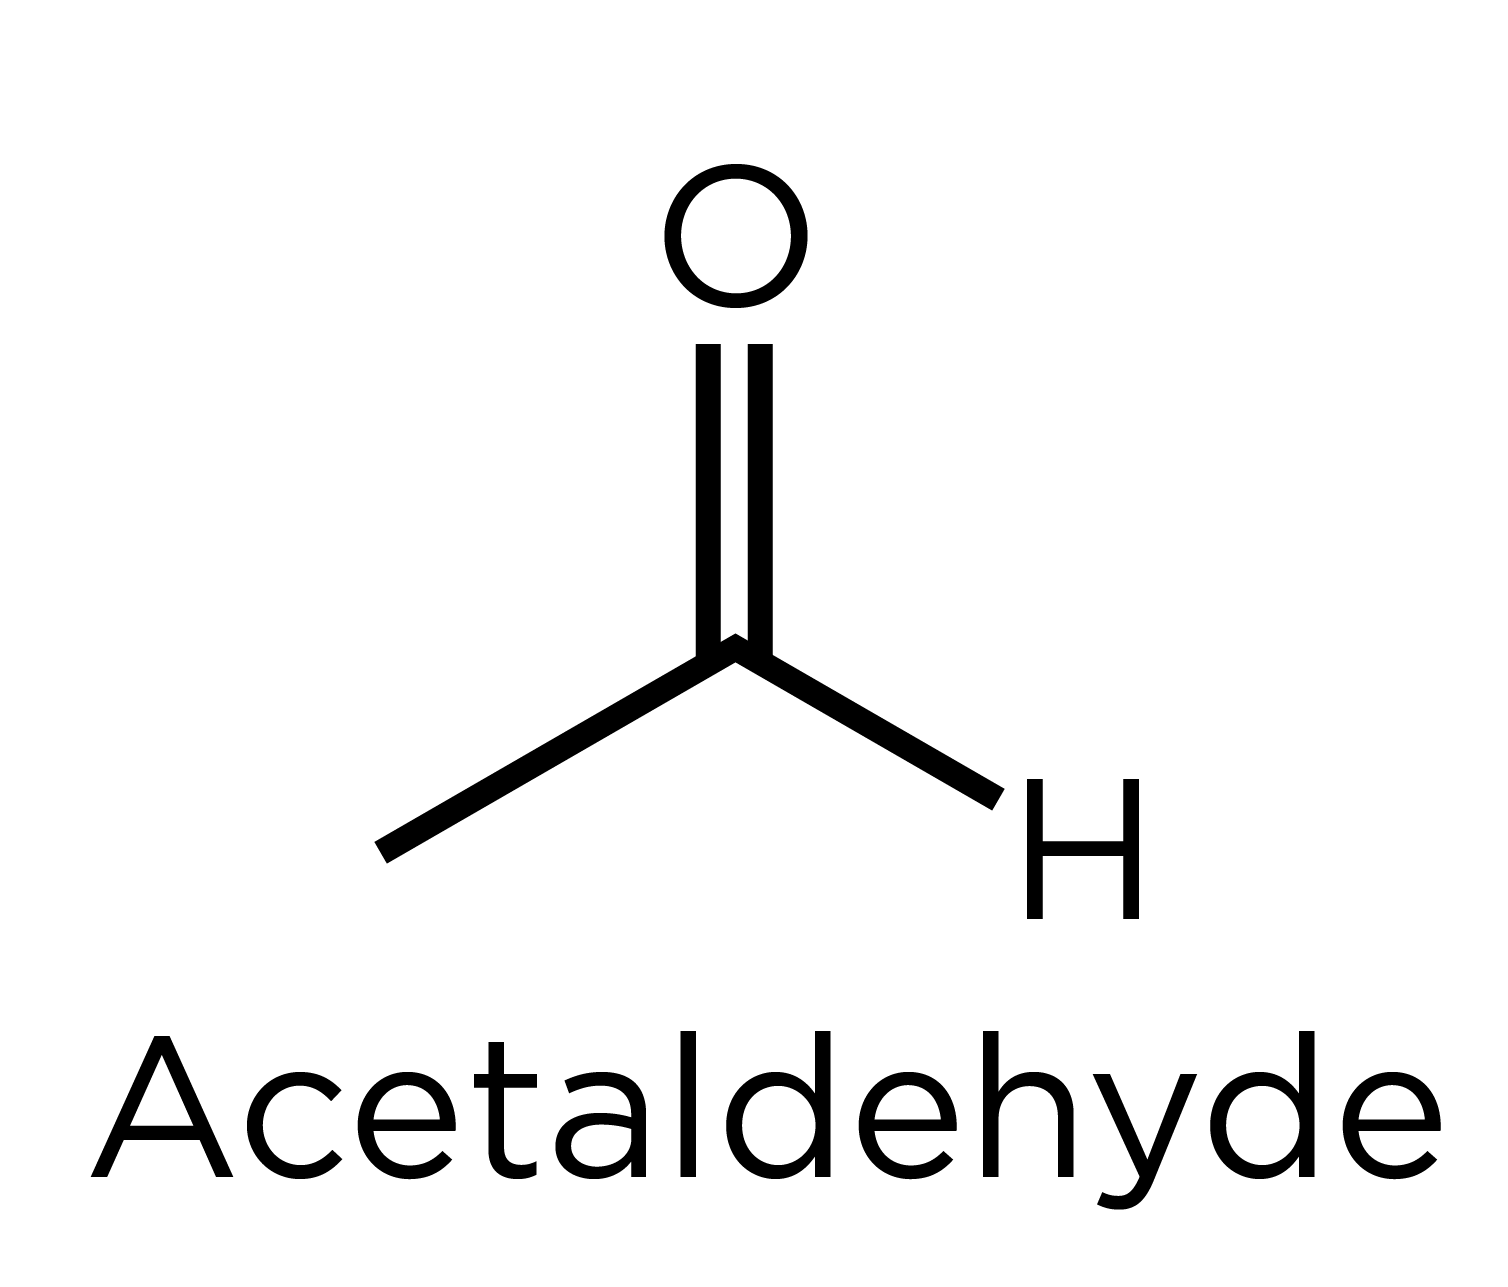 Acetaldehyde skeletal structure